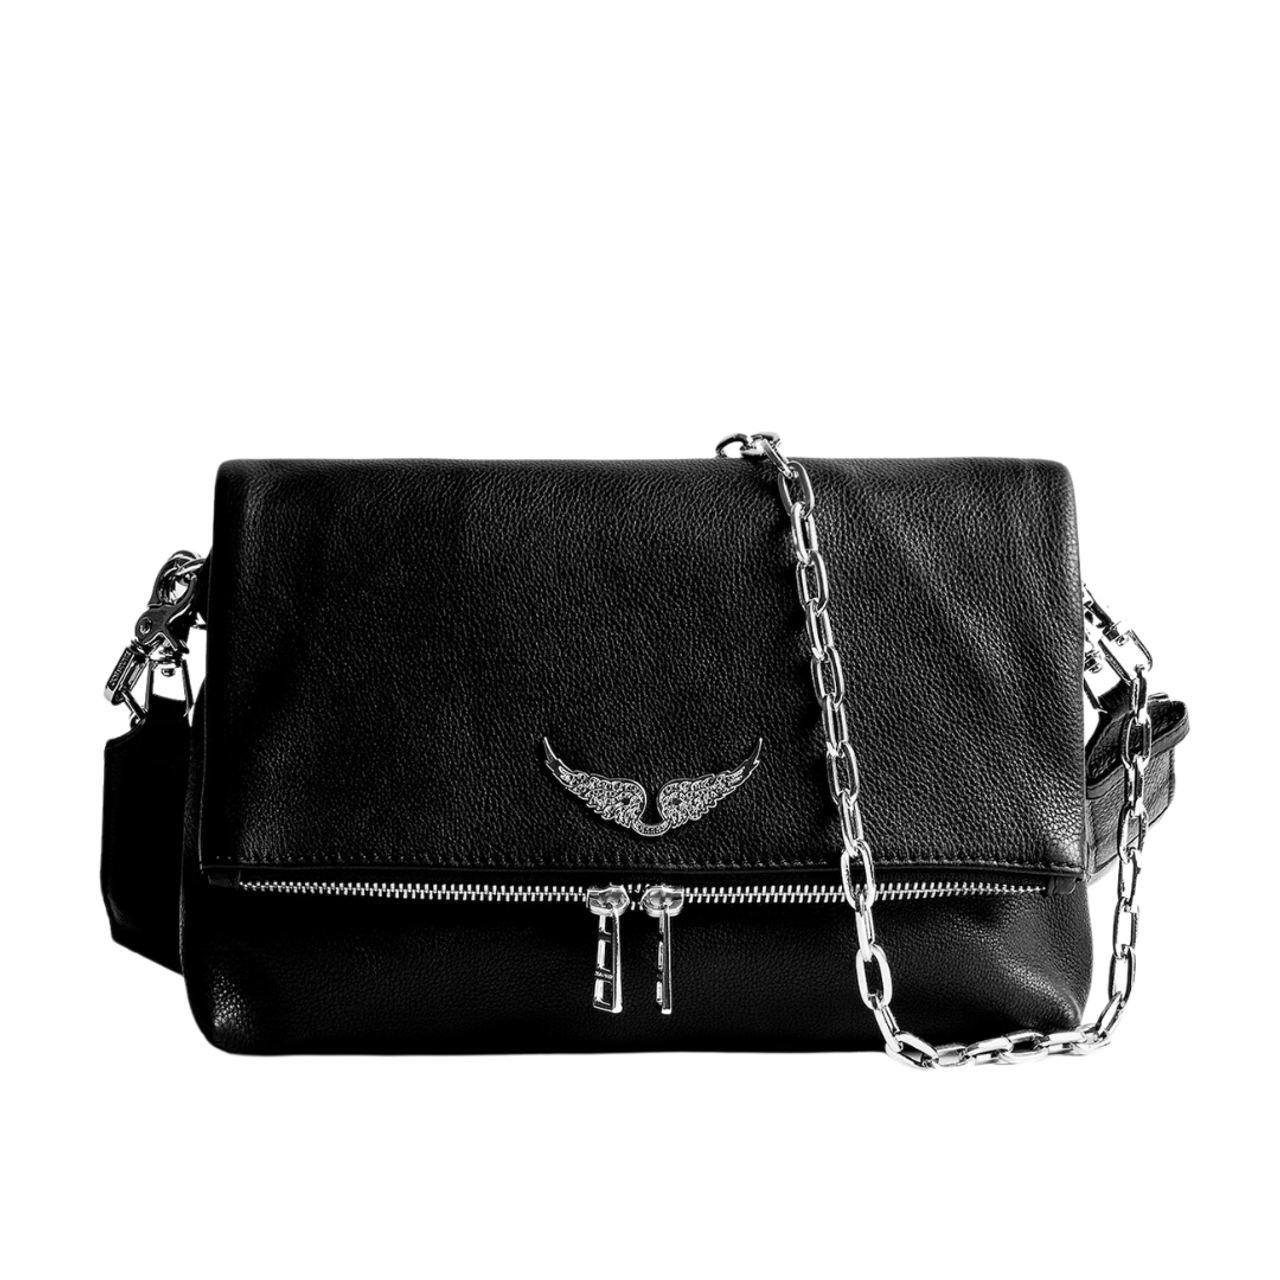 Zadig & Voltaire Rock Star noir purse